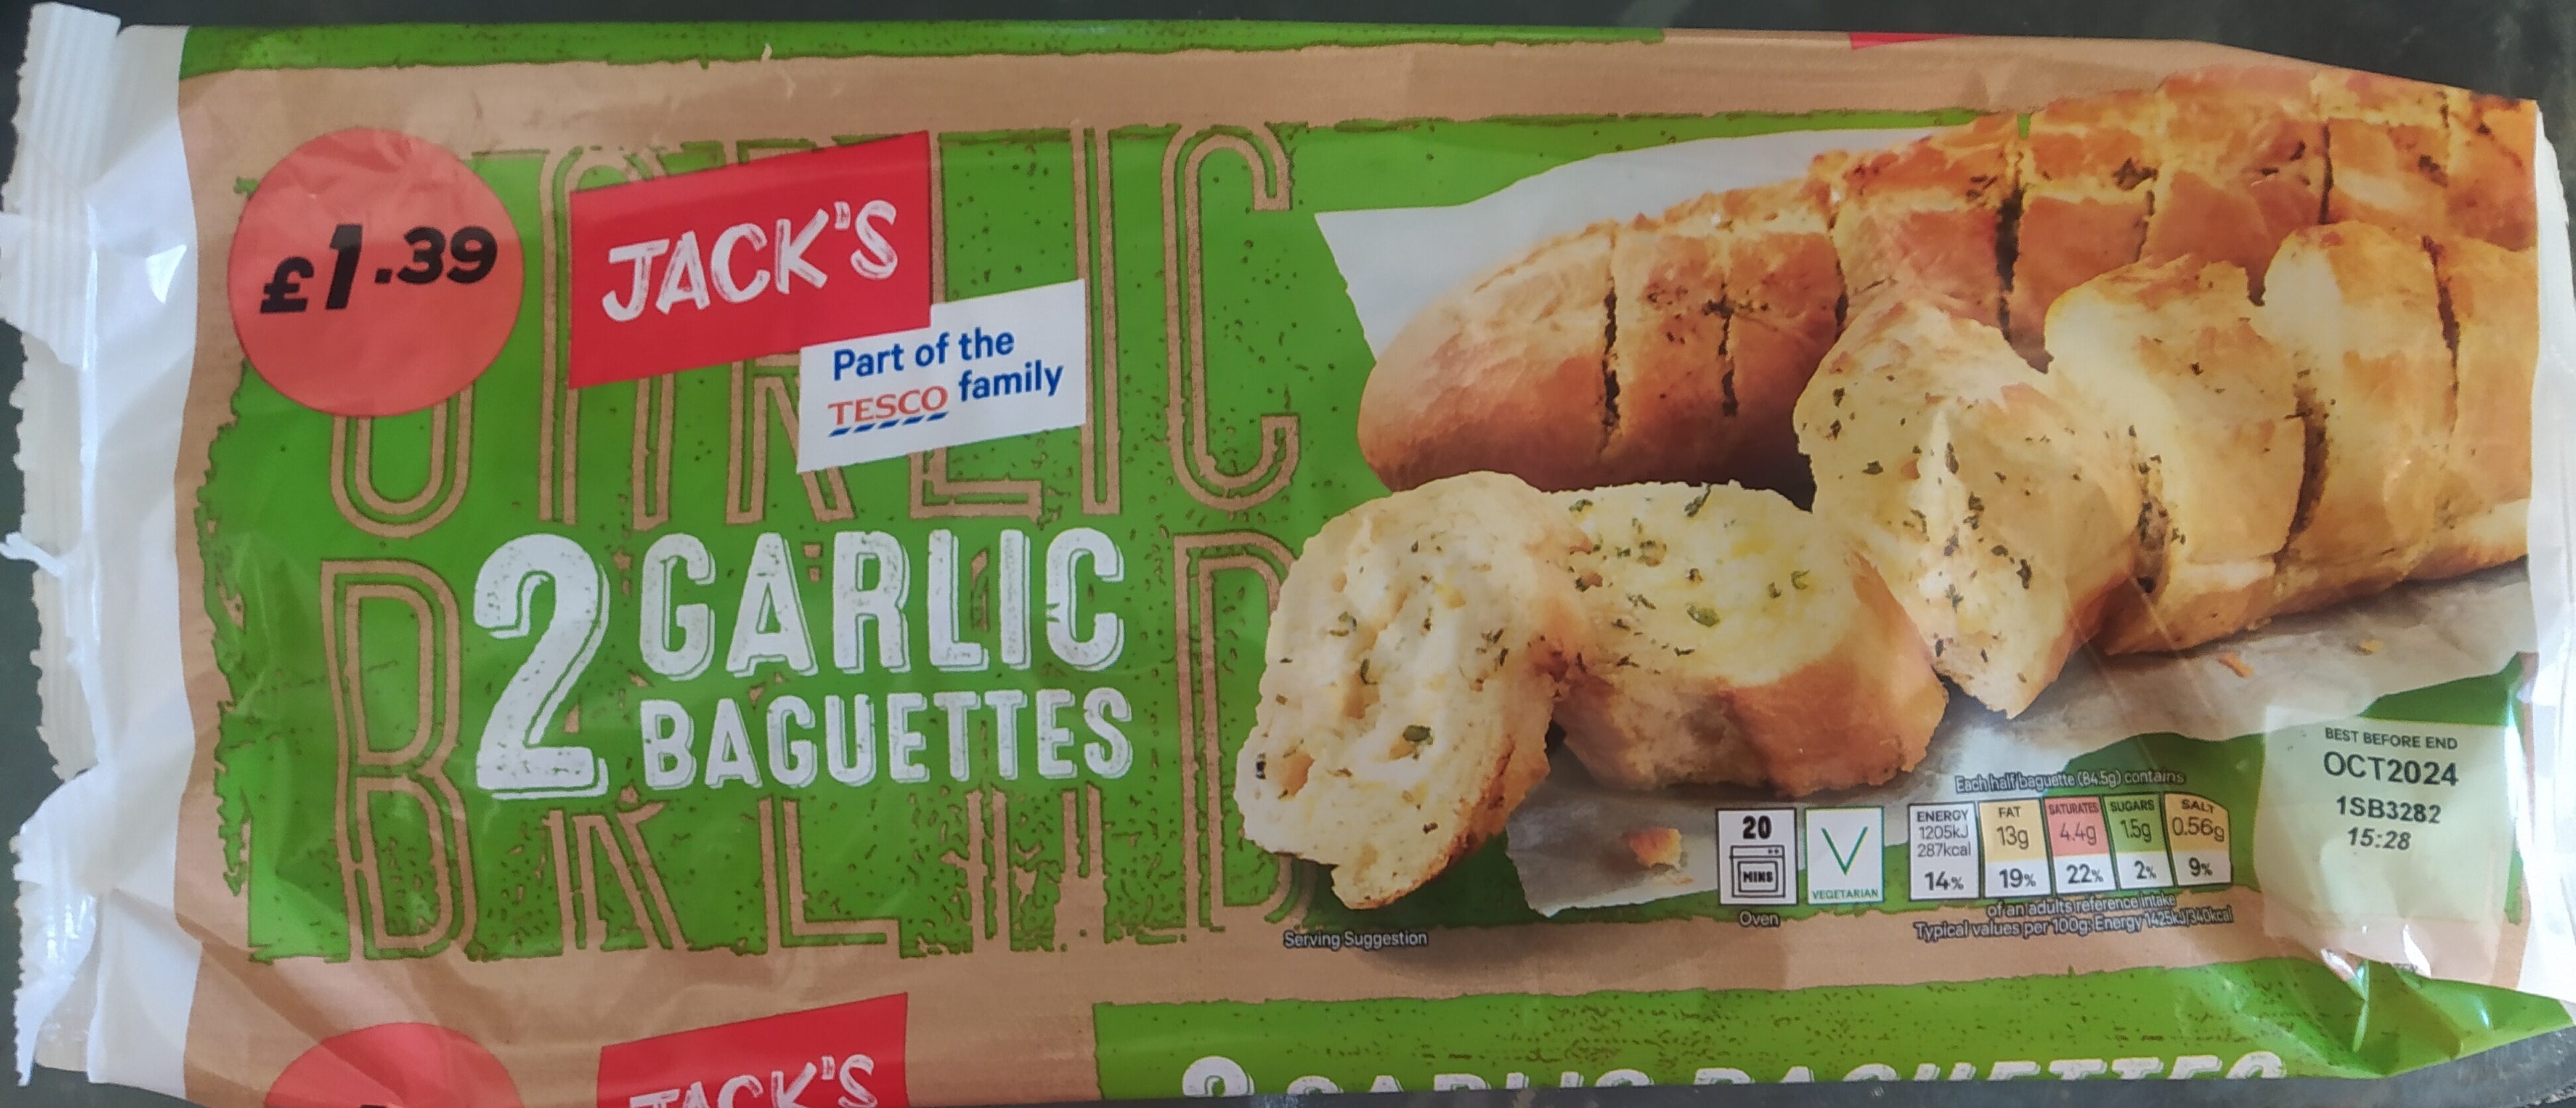 2 Garlic Baguettes - Product